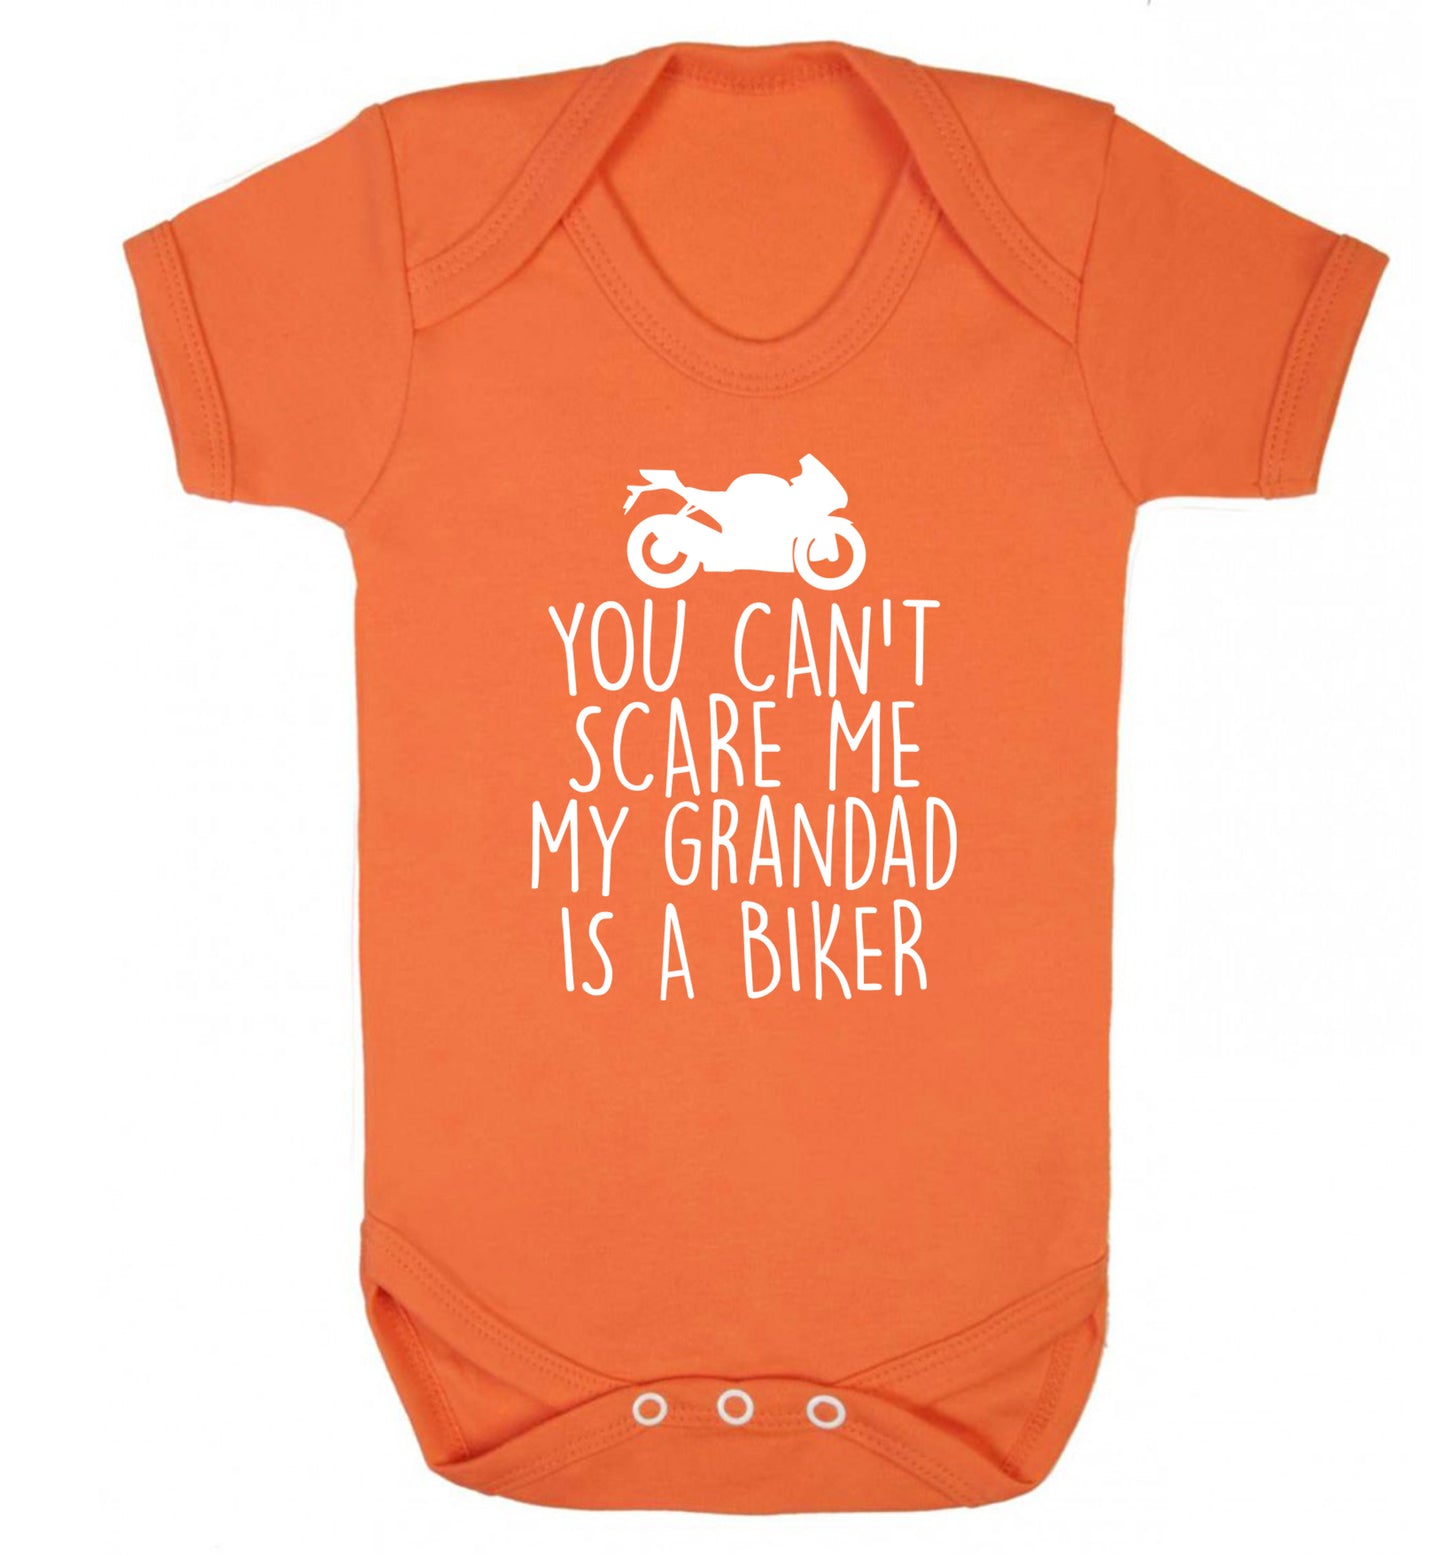 You can't scare me my grandad is a biker Baby Vest orange 18-24 months